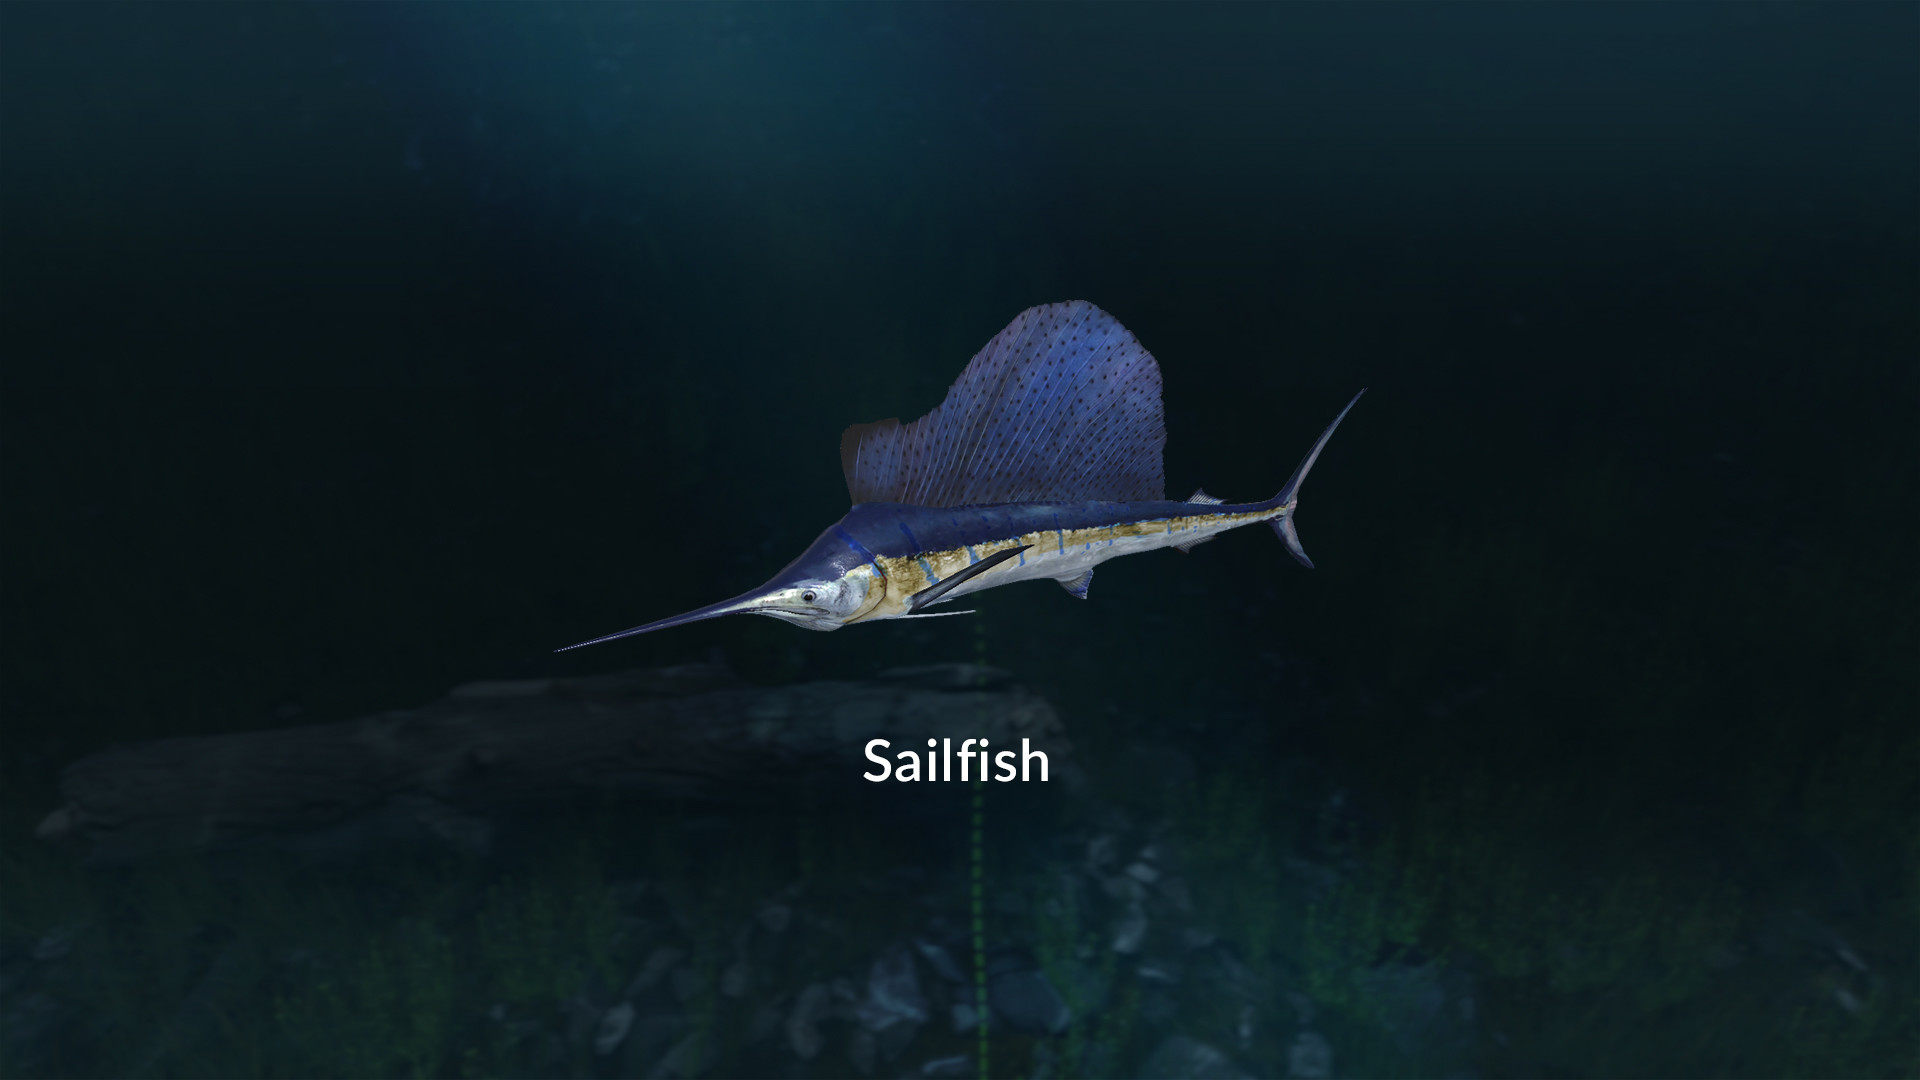 Ultimate Fishing Simulator VR - New Fish Species DLC